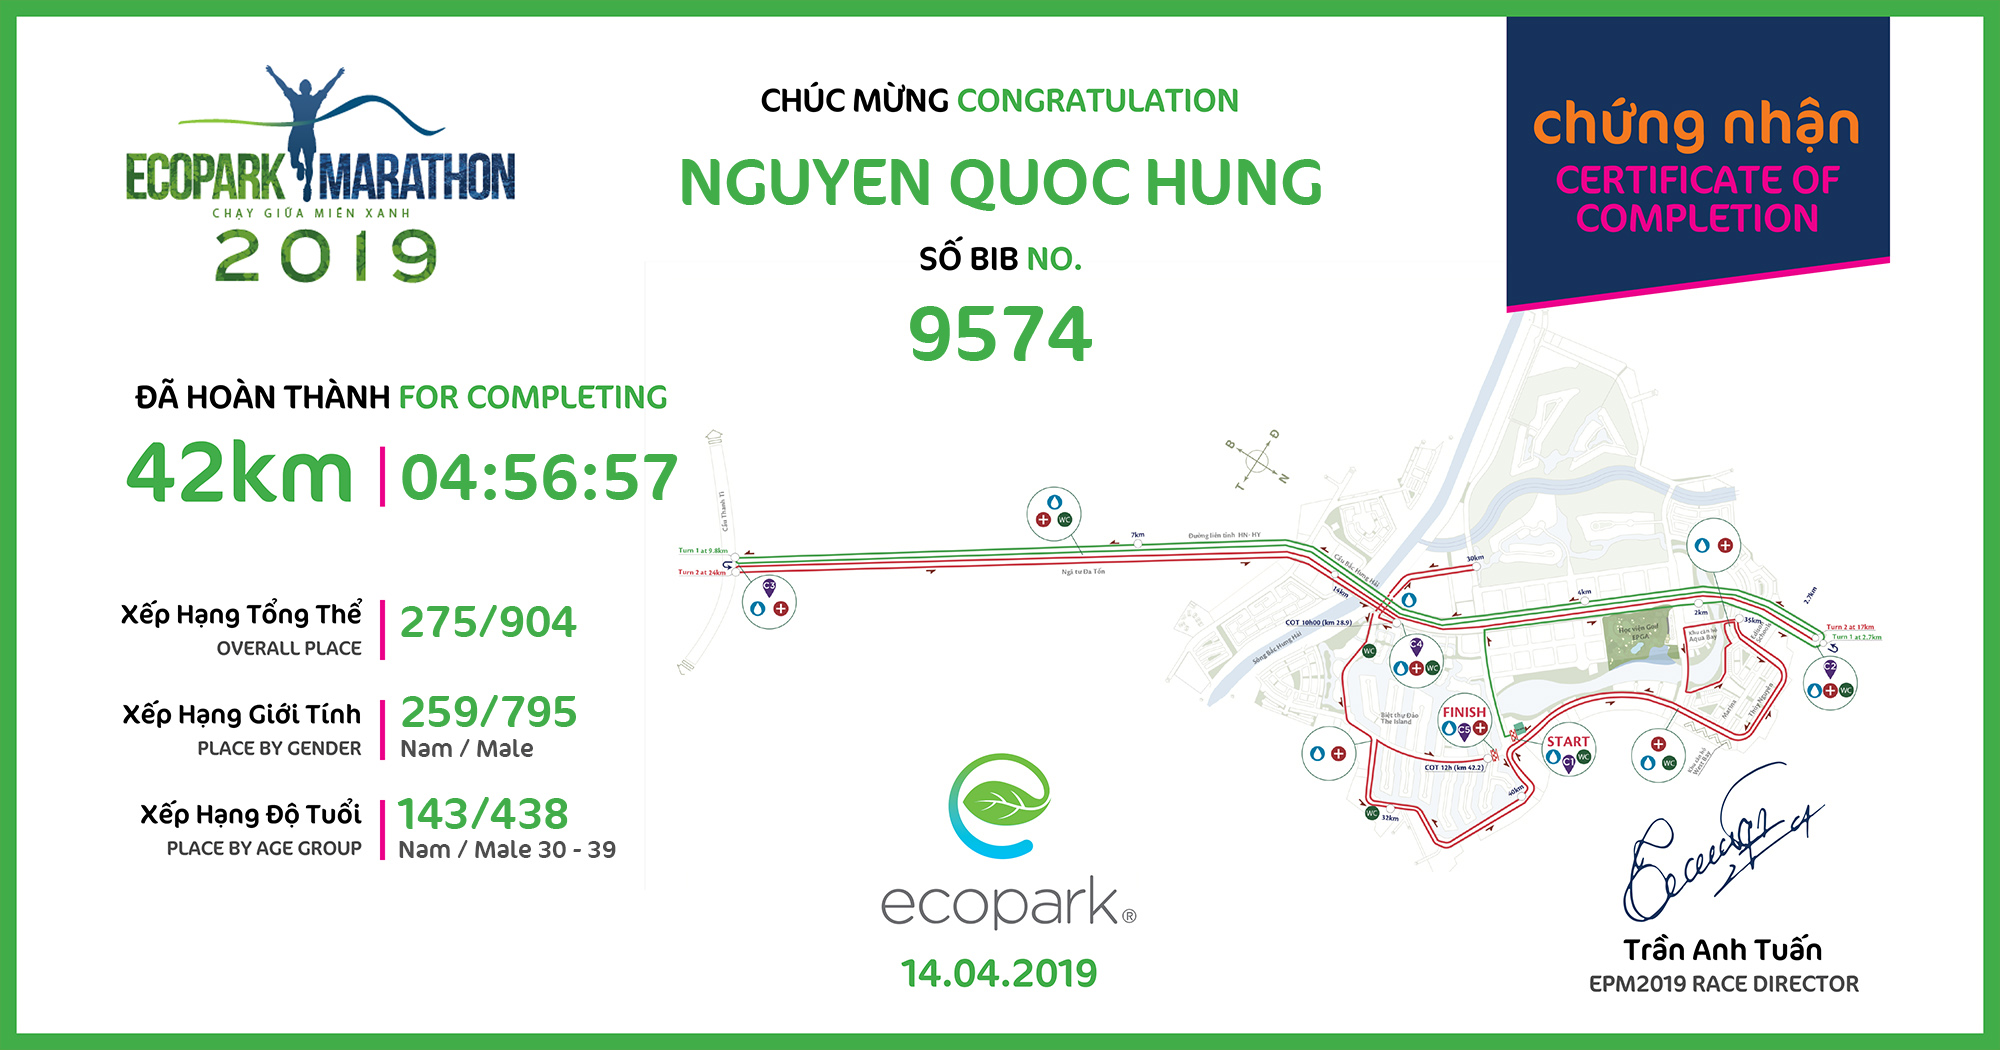 9574 - Nguyen quoc hung